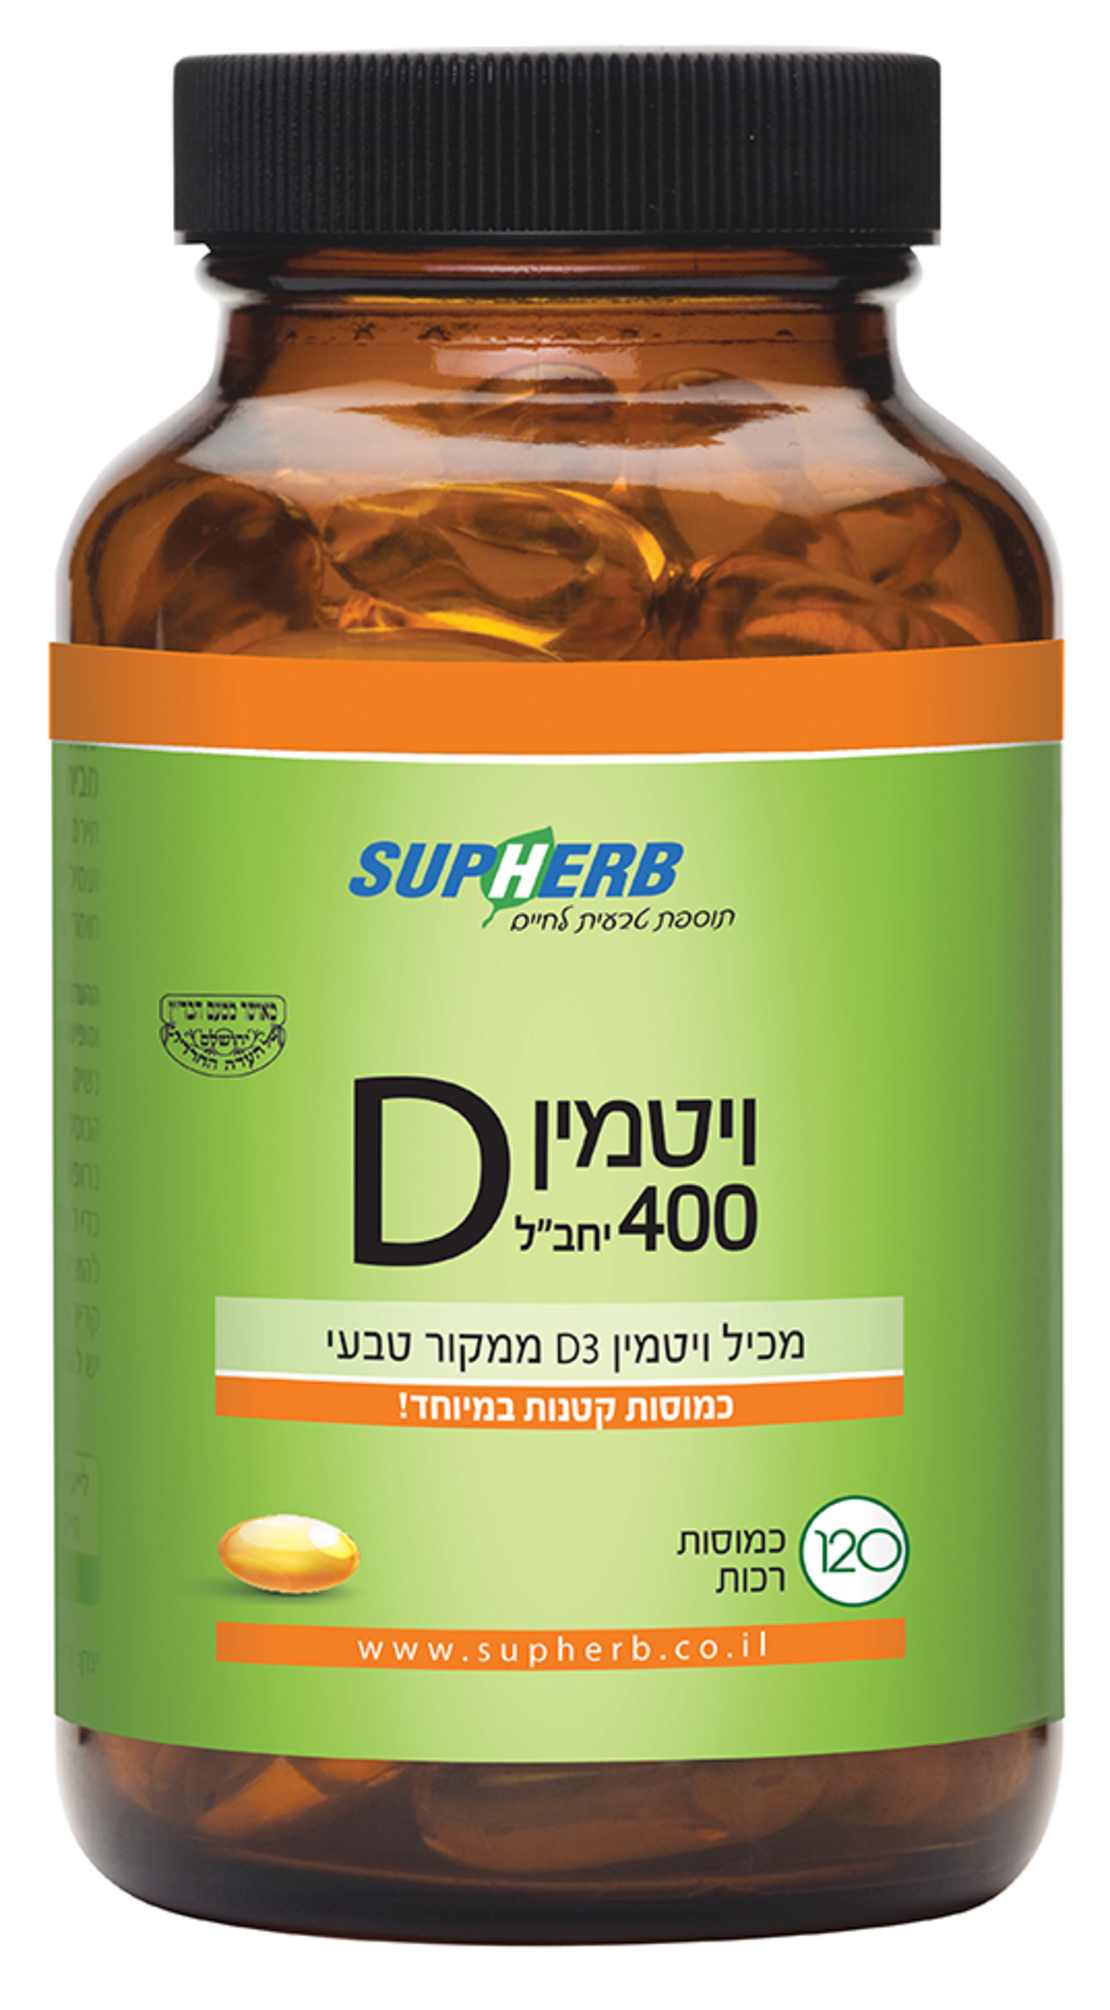 ויטמין D3 סופטג'ל טבעי 400 בד